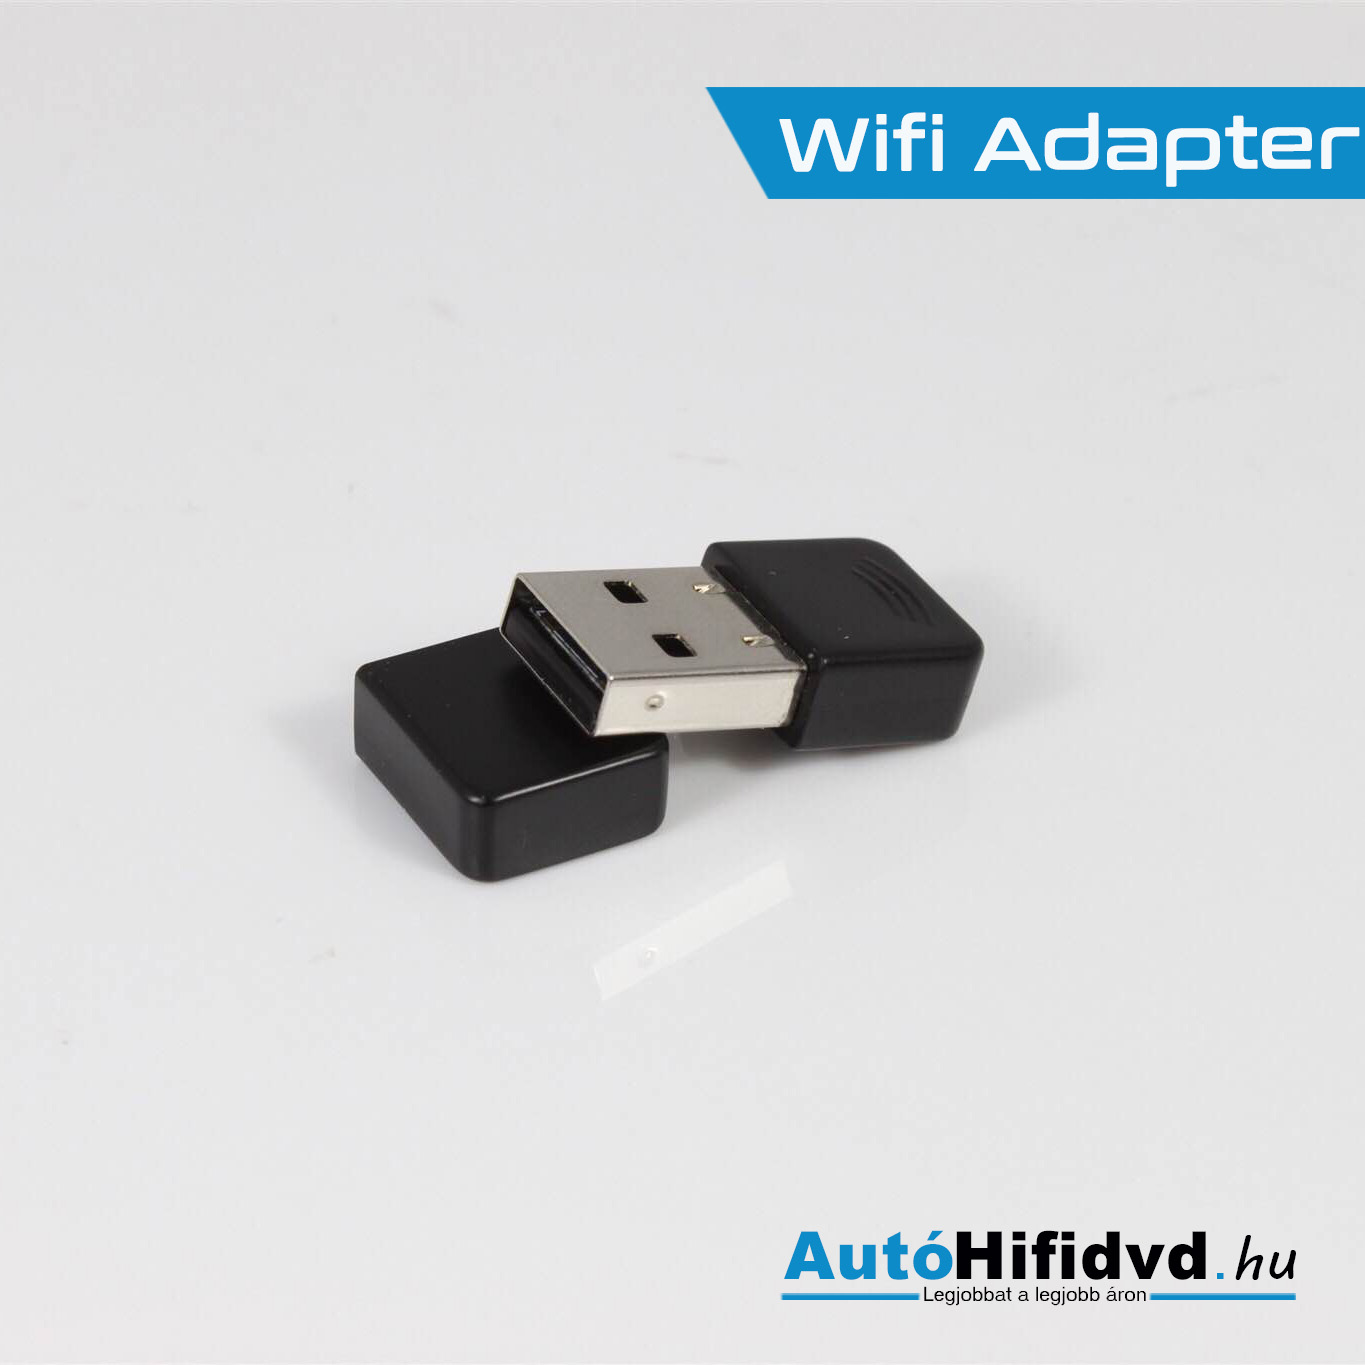 www.autohifidvd.hu /autóhifi, márka specifikus autós multimédia/Új, Mini WiFi Internet USB Adapter Dongle